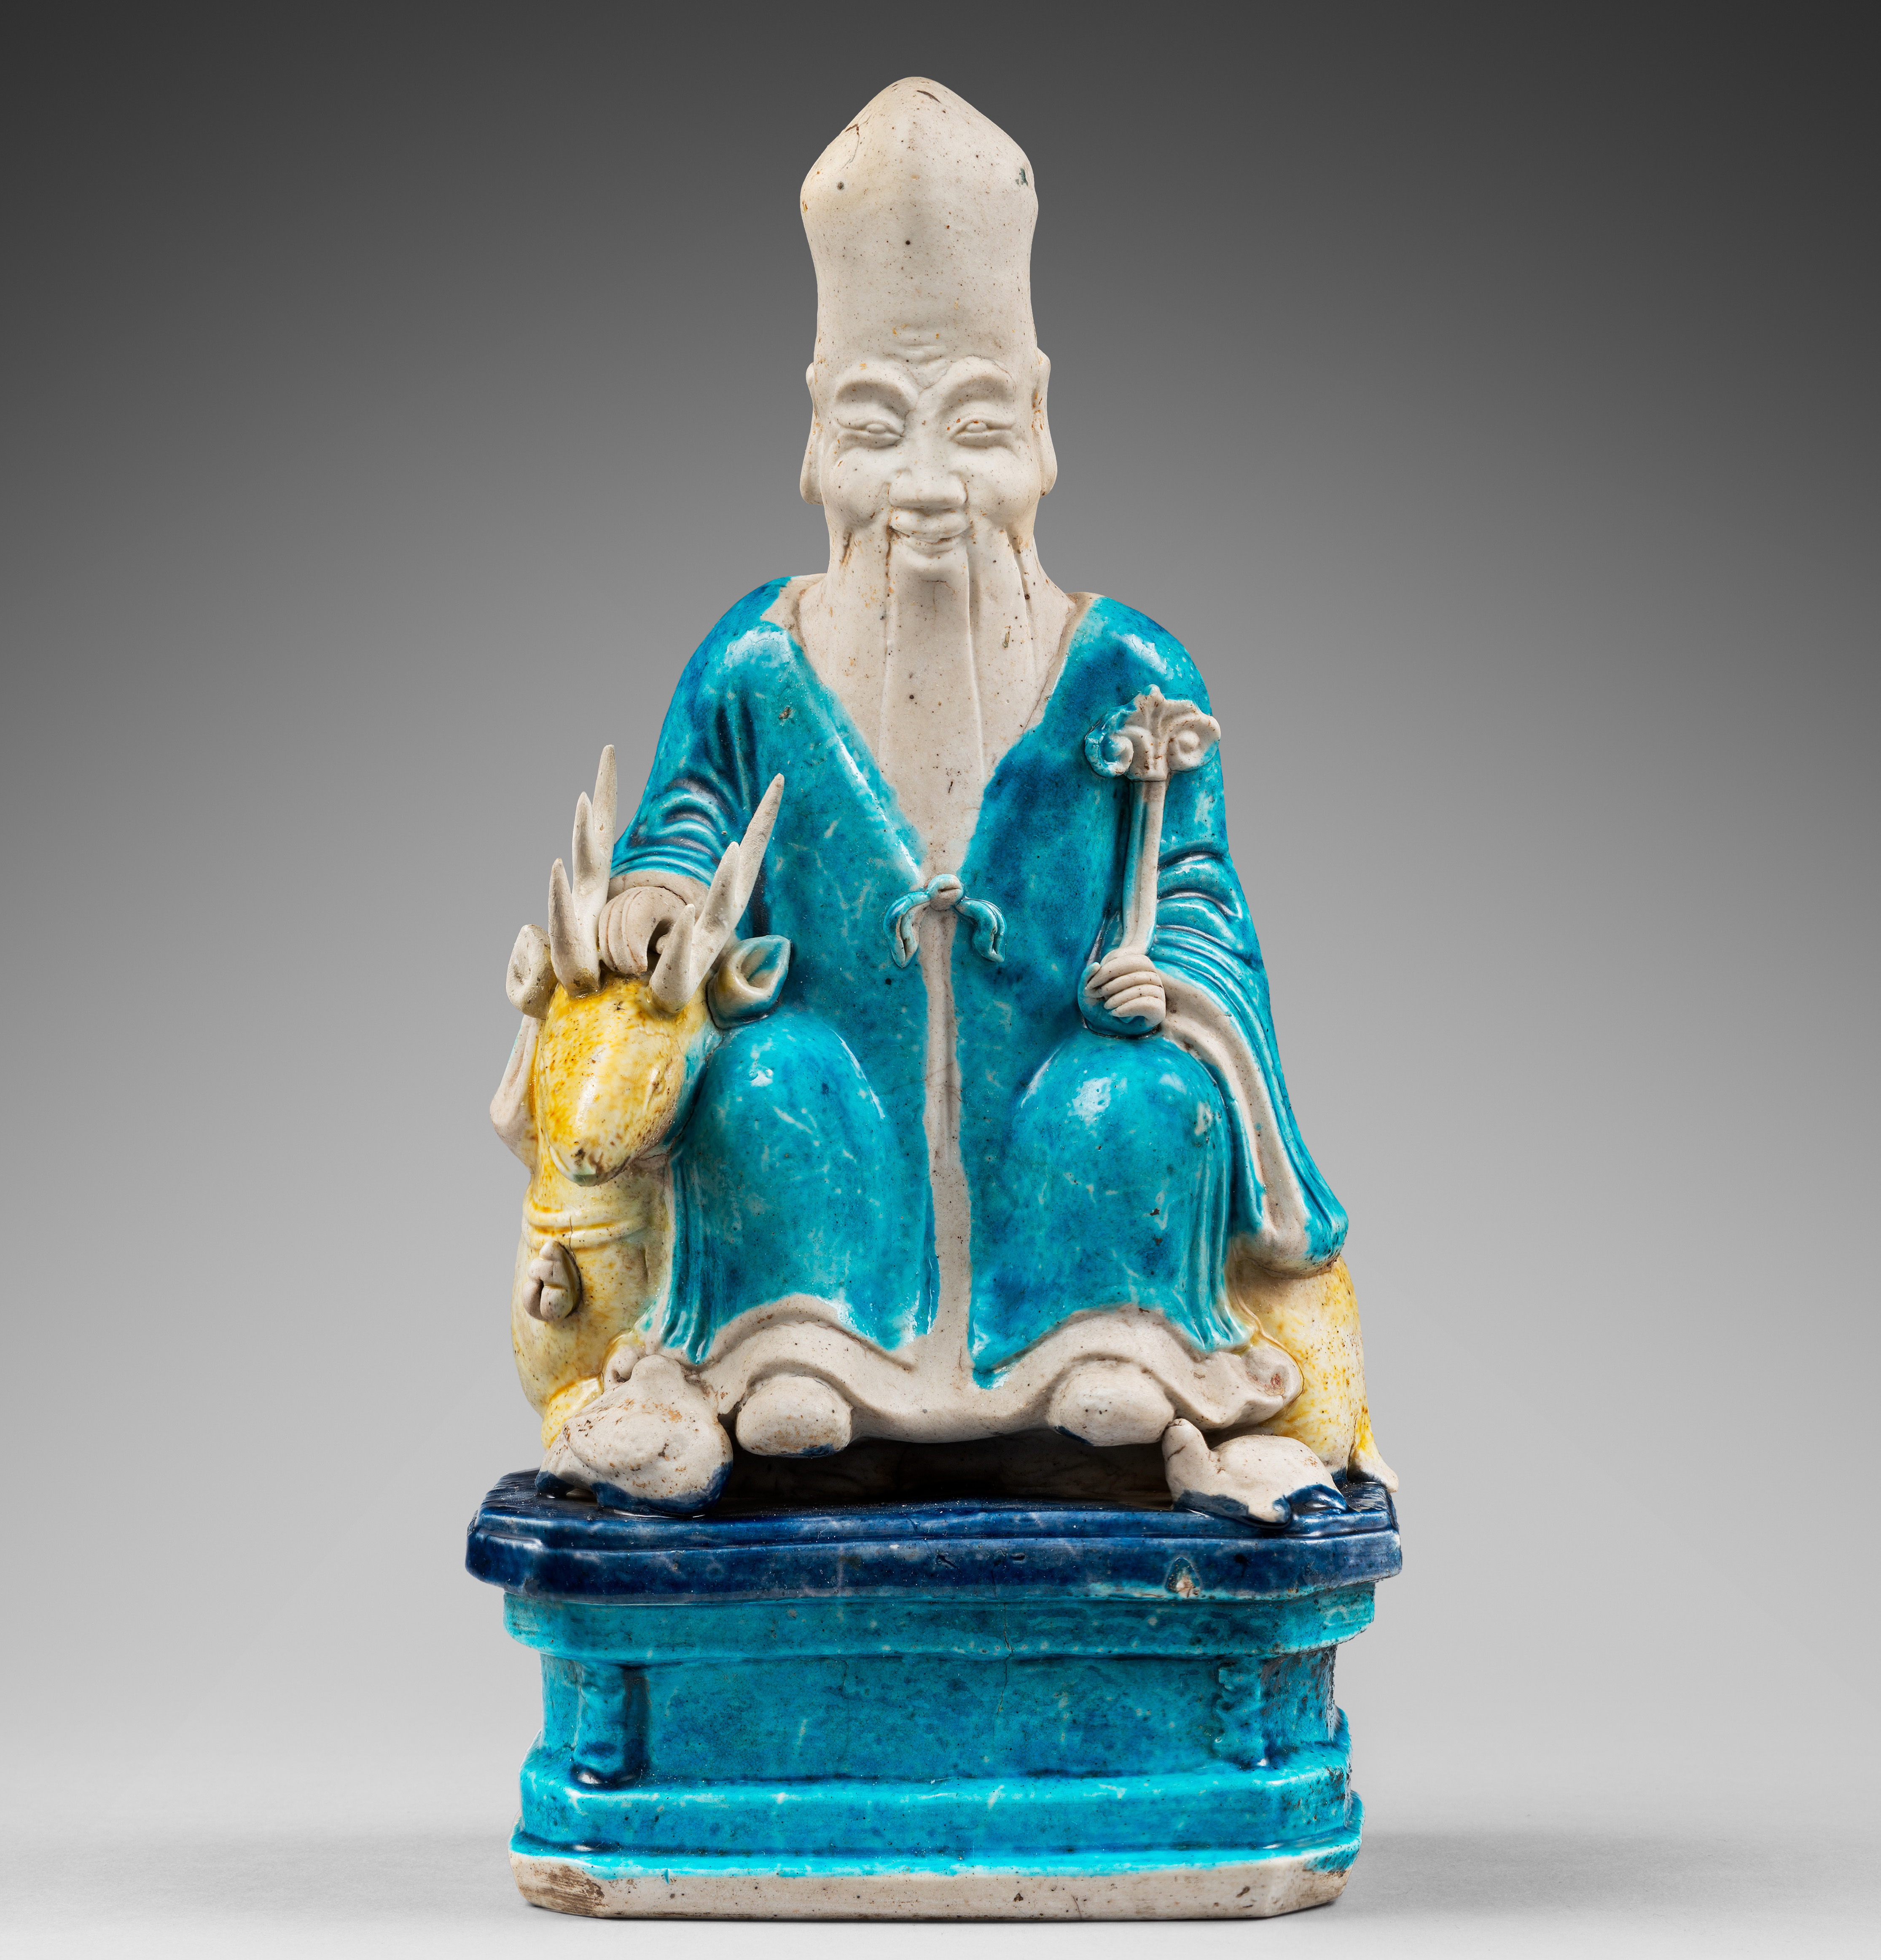 Porcelain Ming dynasty (1368-1644), China